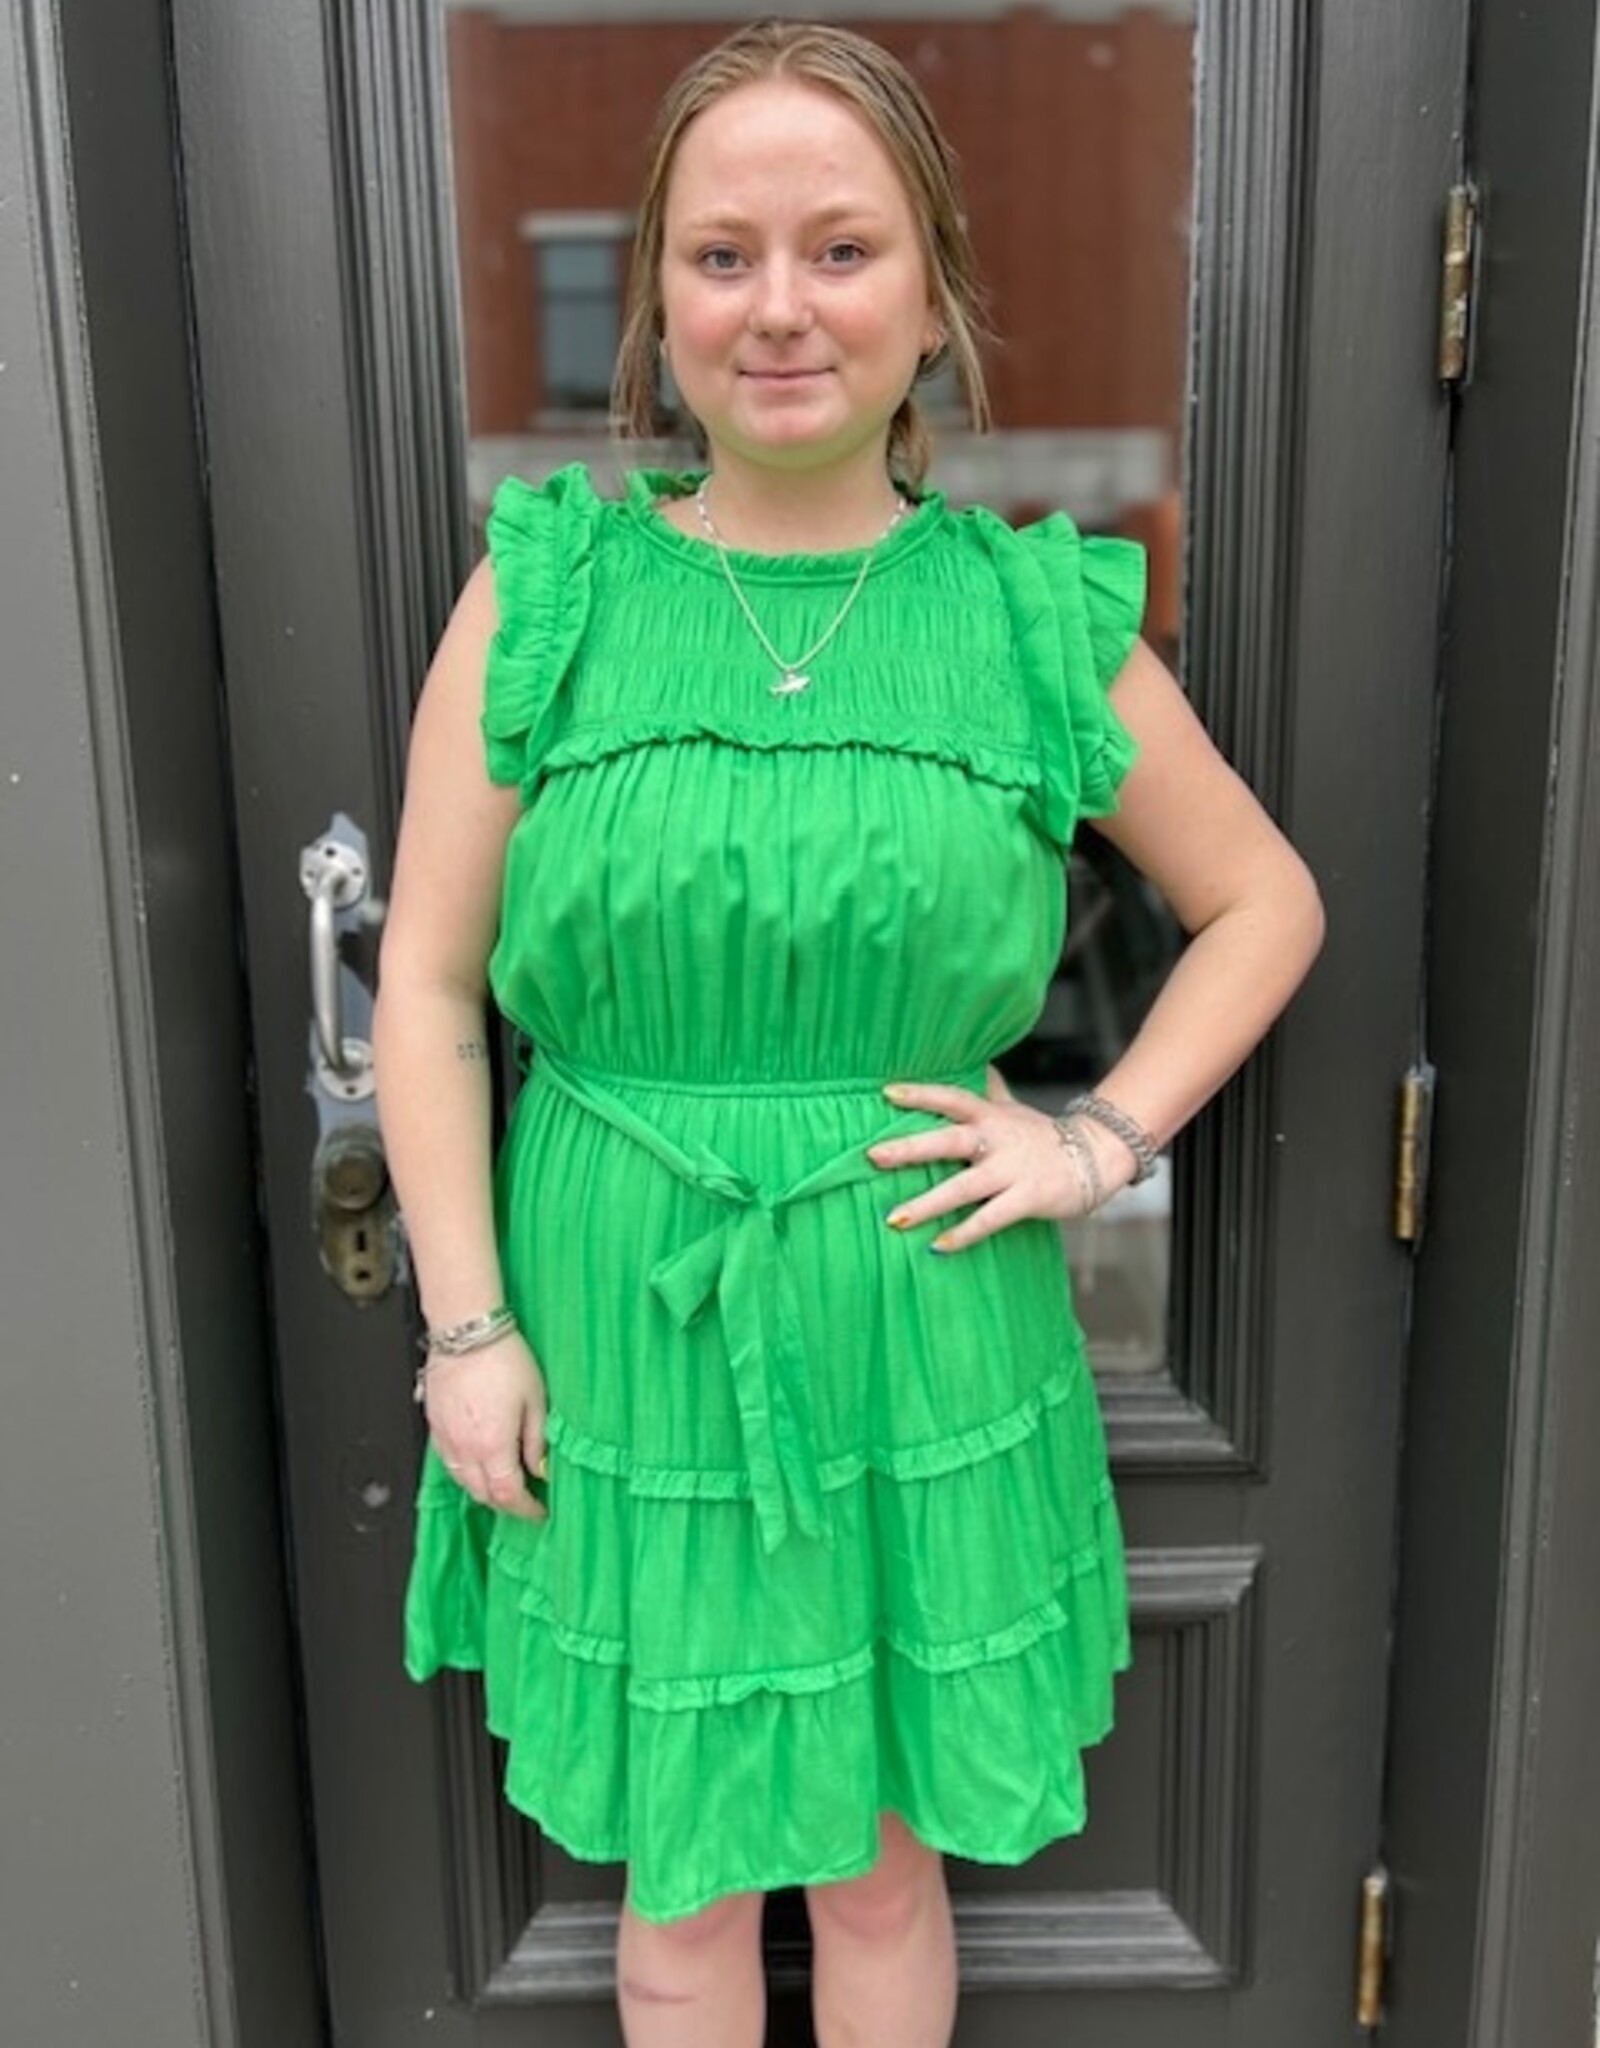 Dress Norah Green Smocked Ruffle Tie Dress